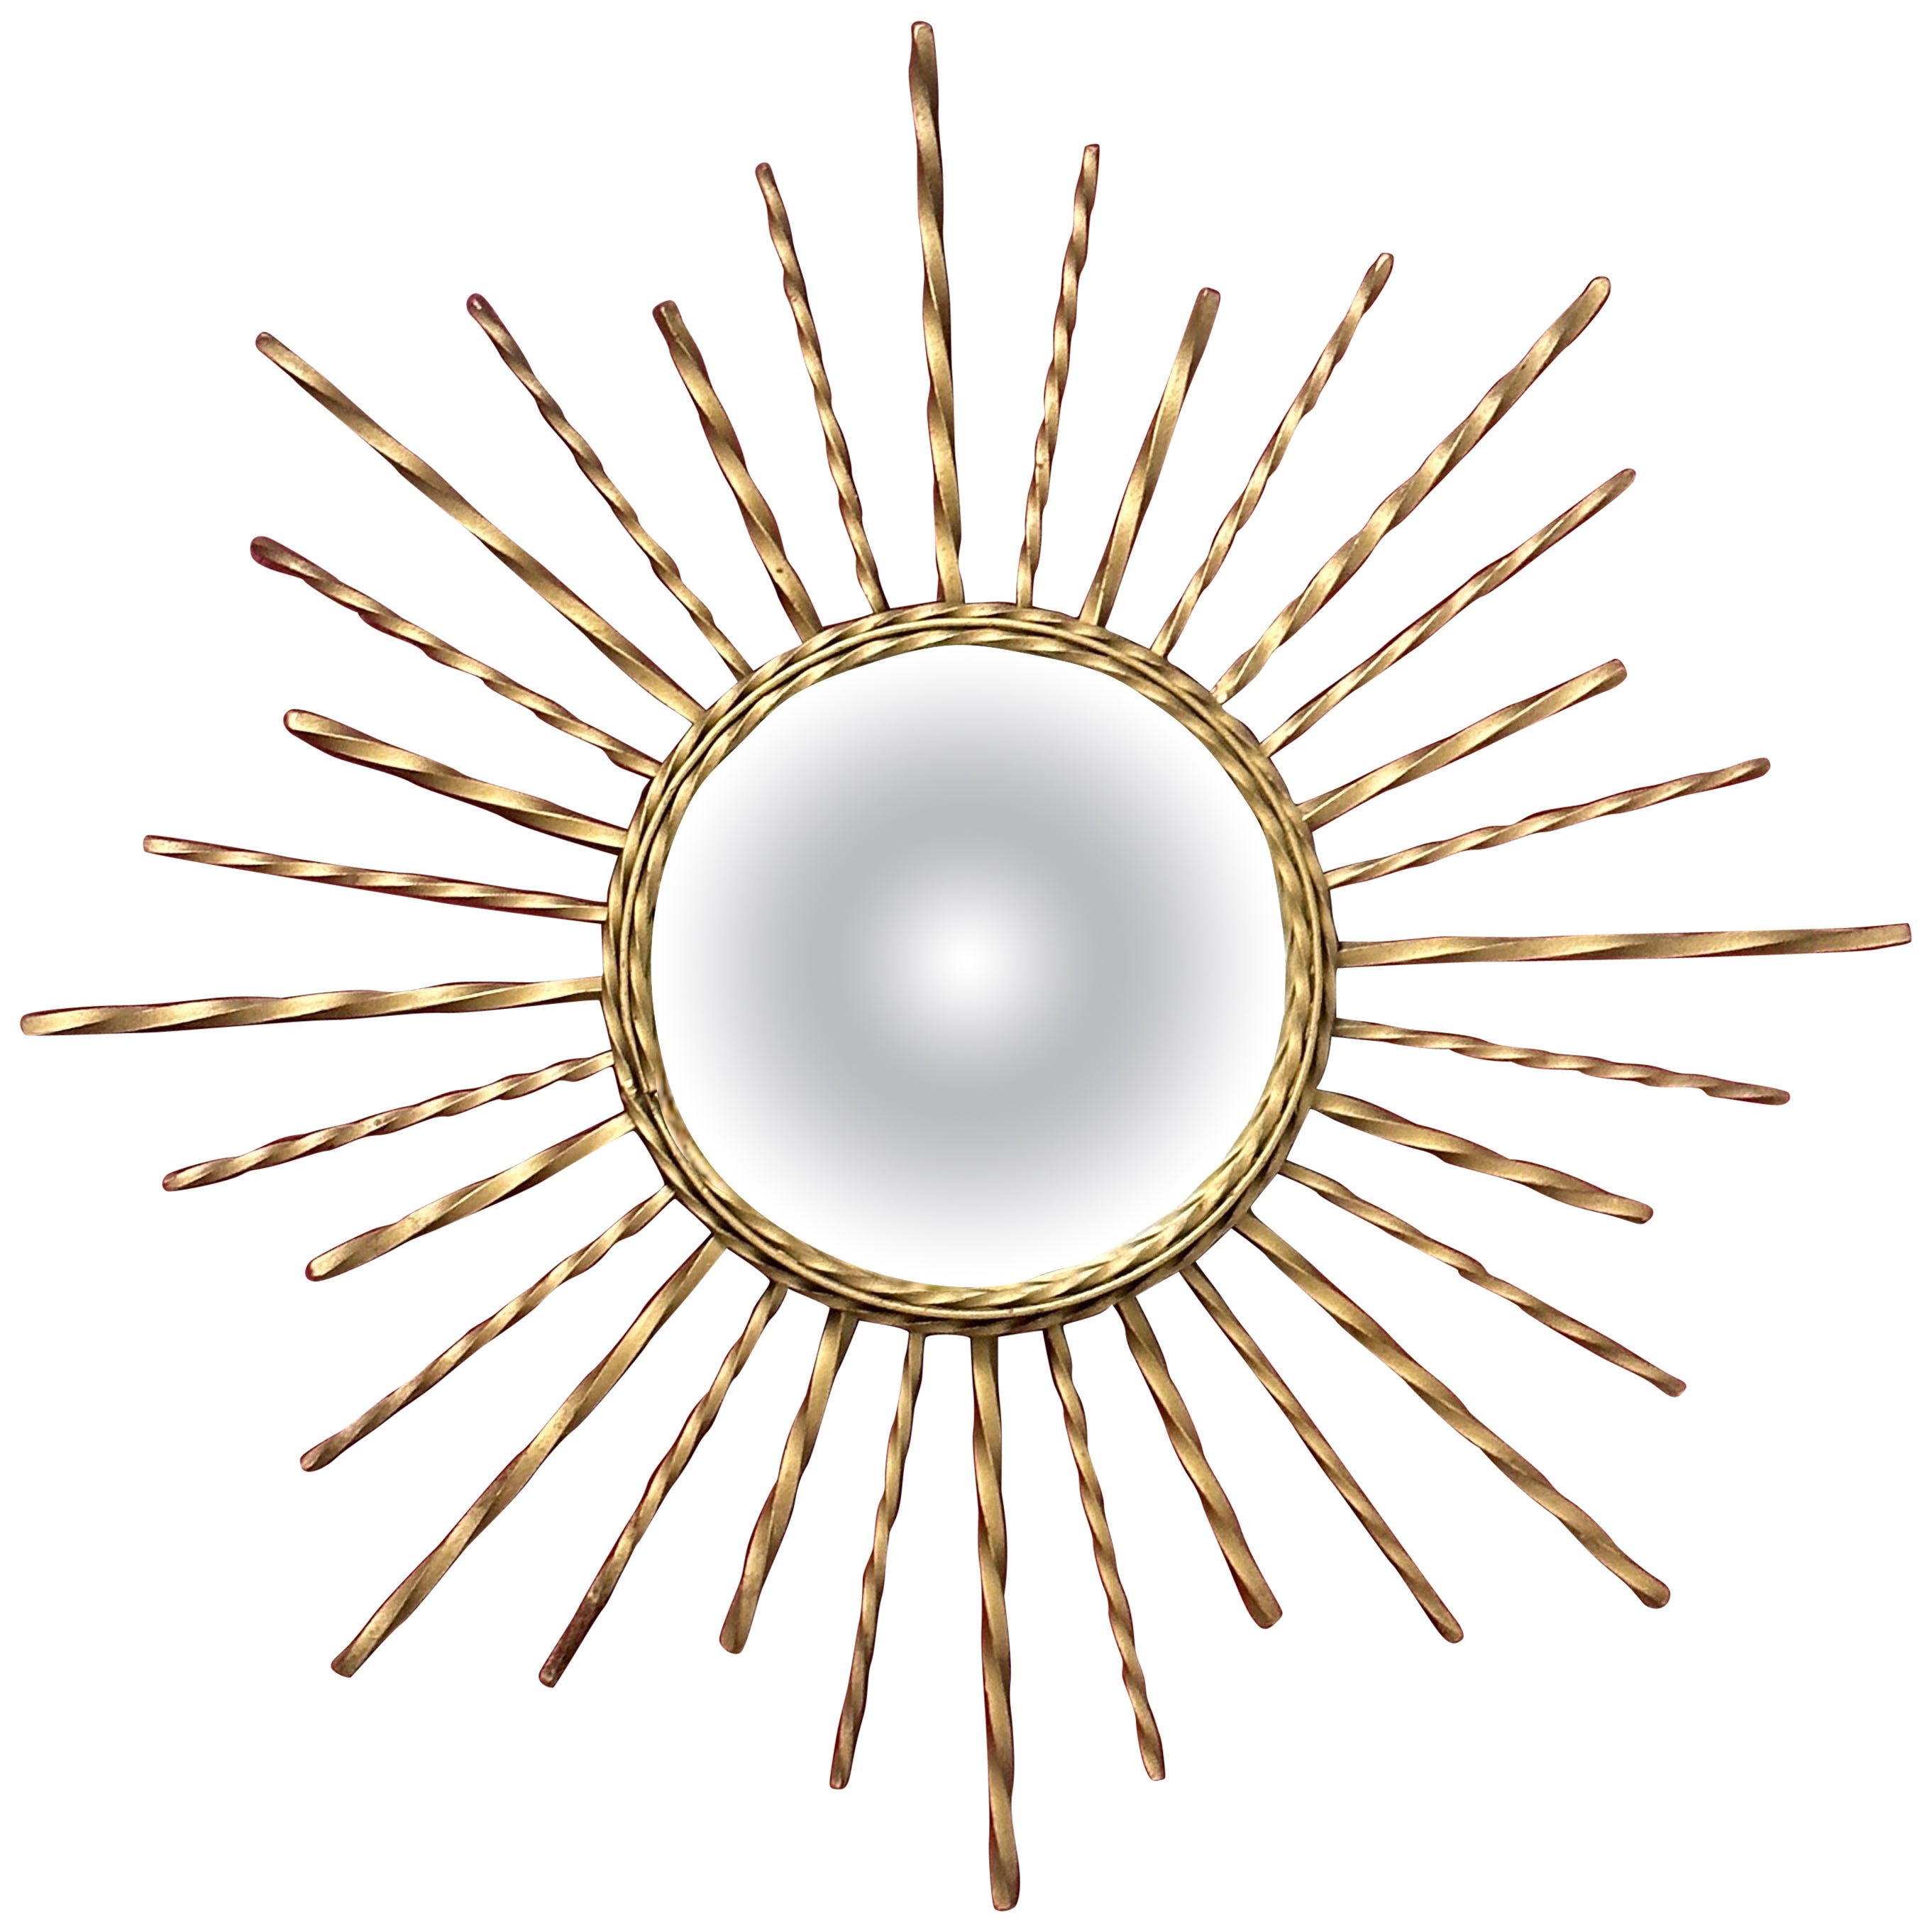 Stunning Large Vallauris Style Starburst Sunburst Convex Mirror Wall Lamp 1950s